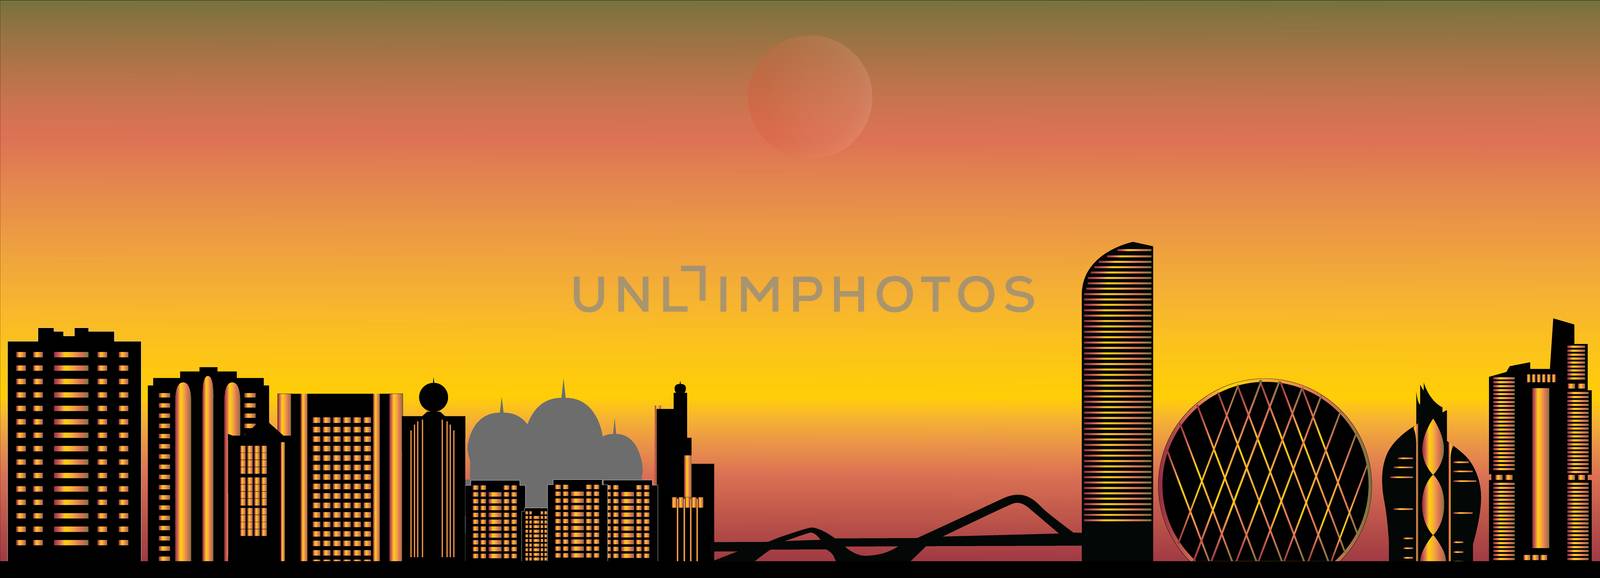 abu dhabi skyline by compuinfoto